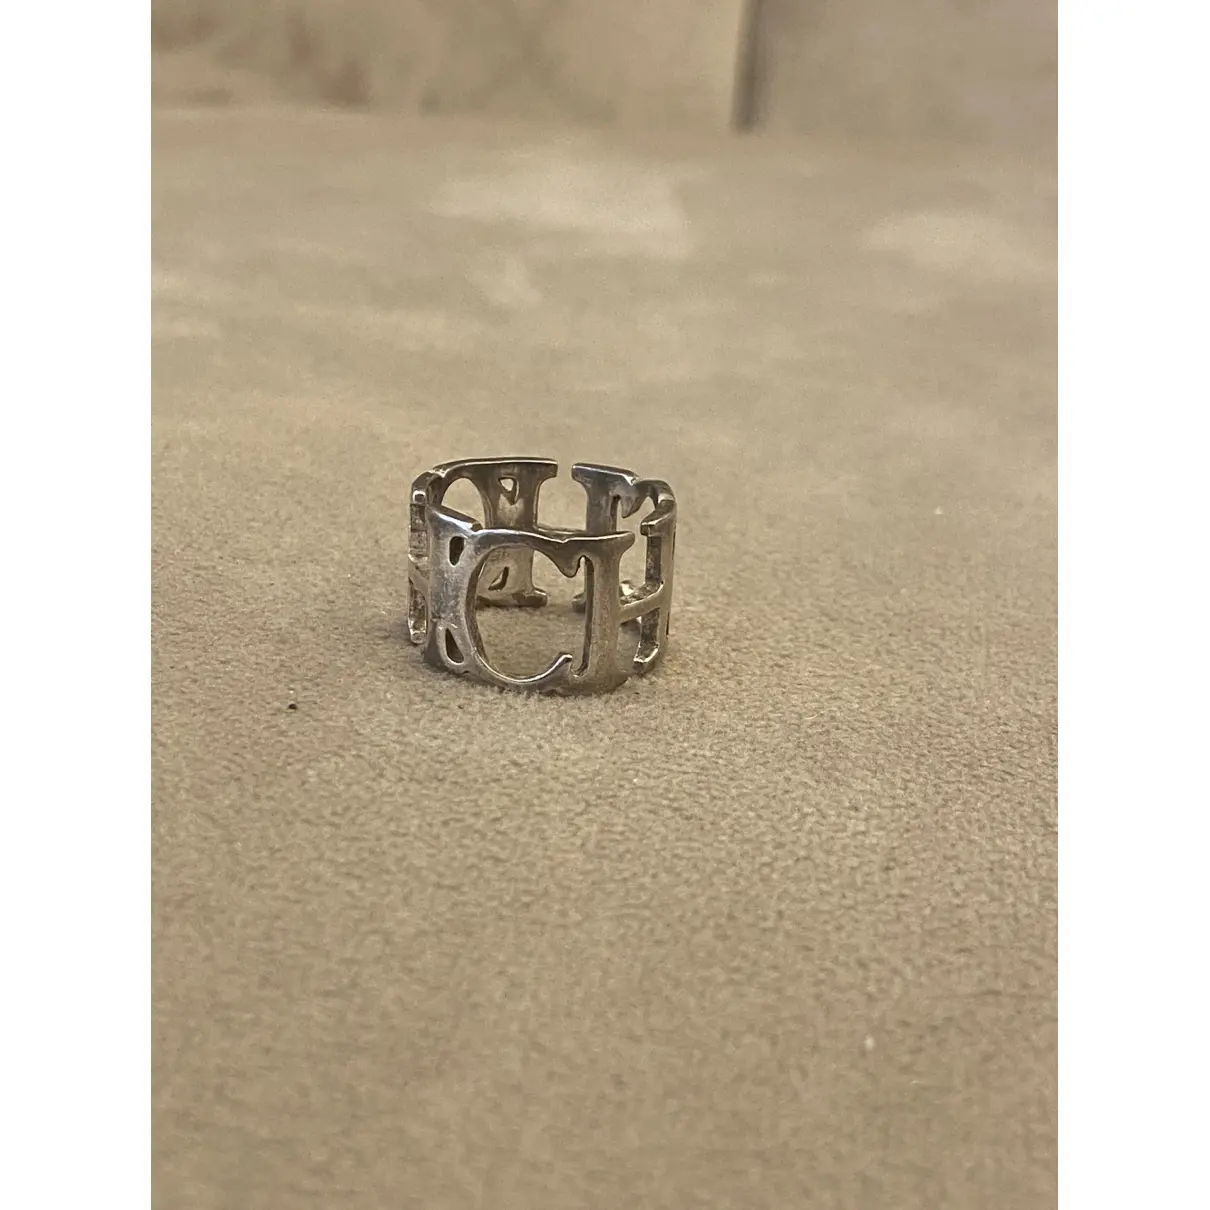 Buy Carolina Herrera Silver ring online